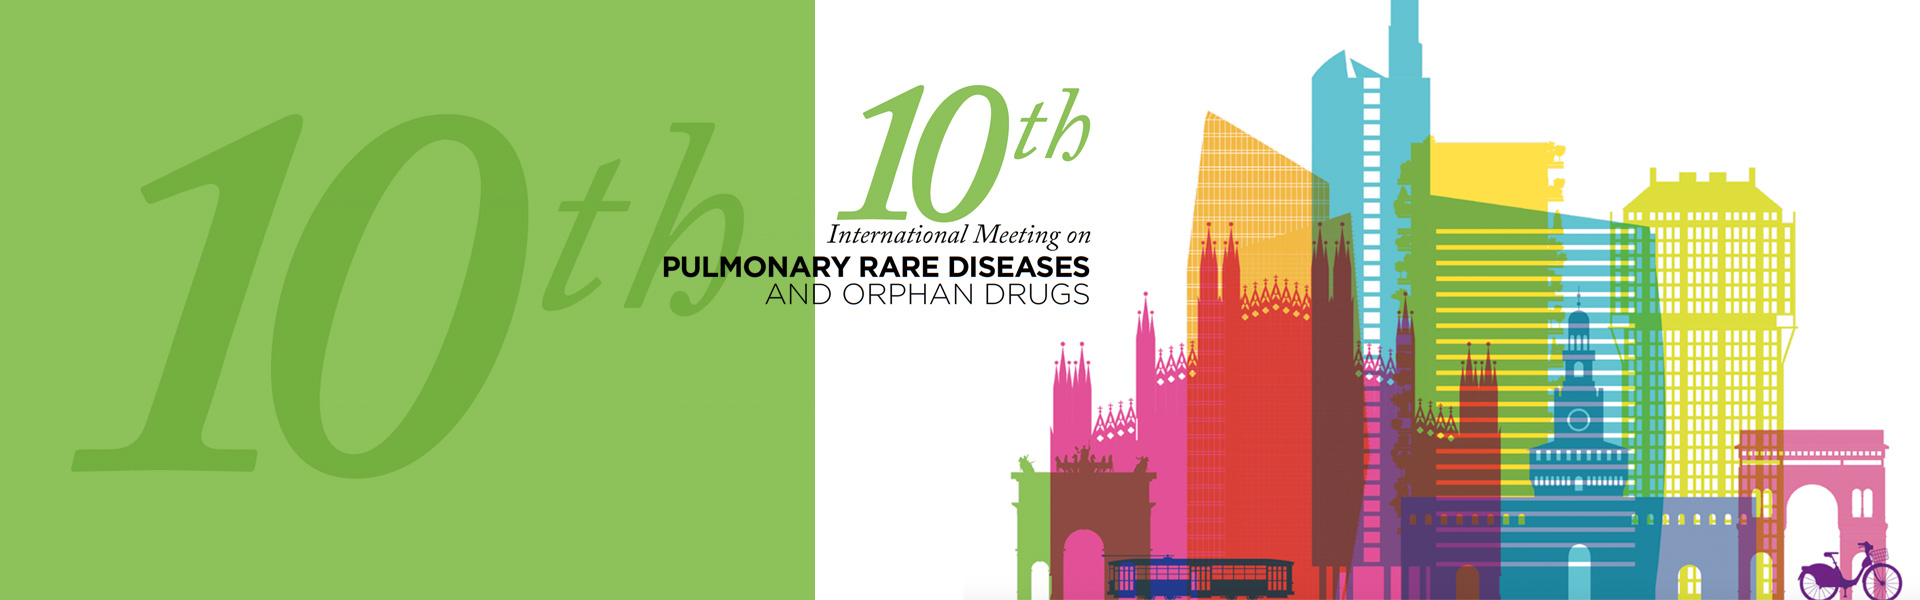 10th International Meeting on Pulmonary Rare Diseases and Orphan Drugs